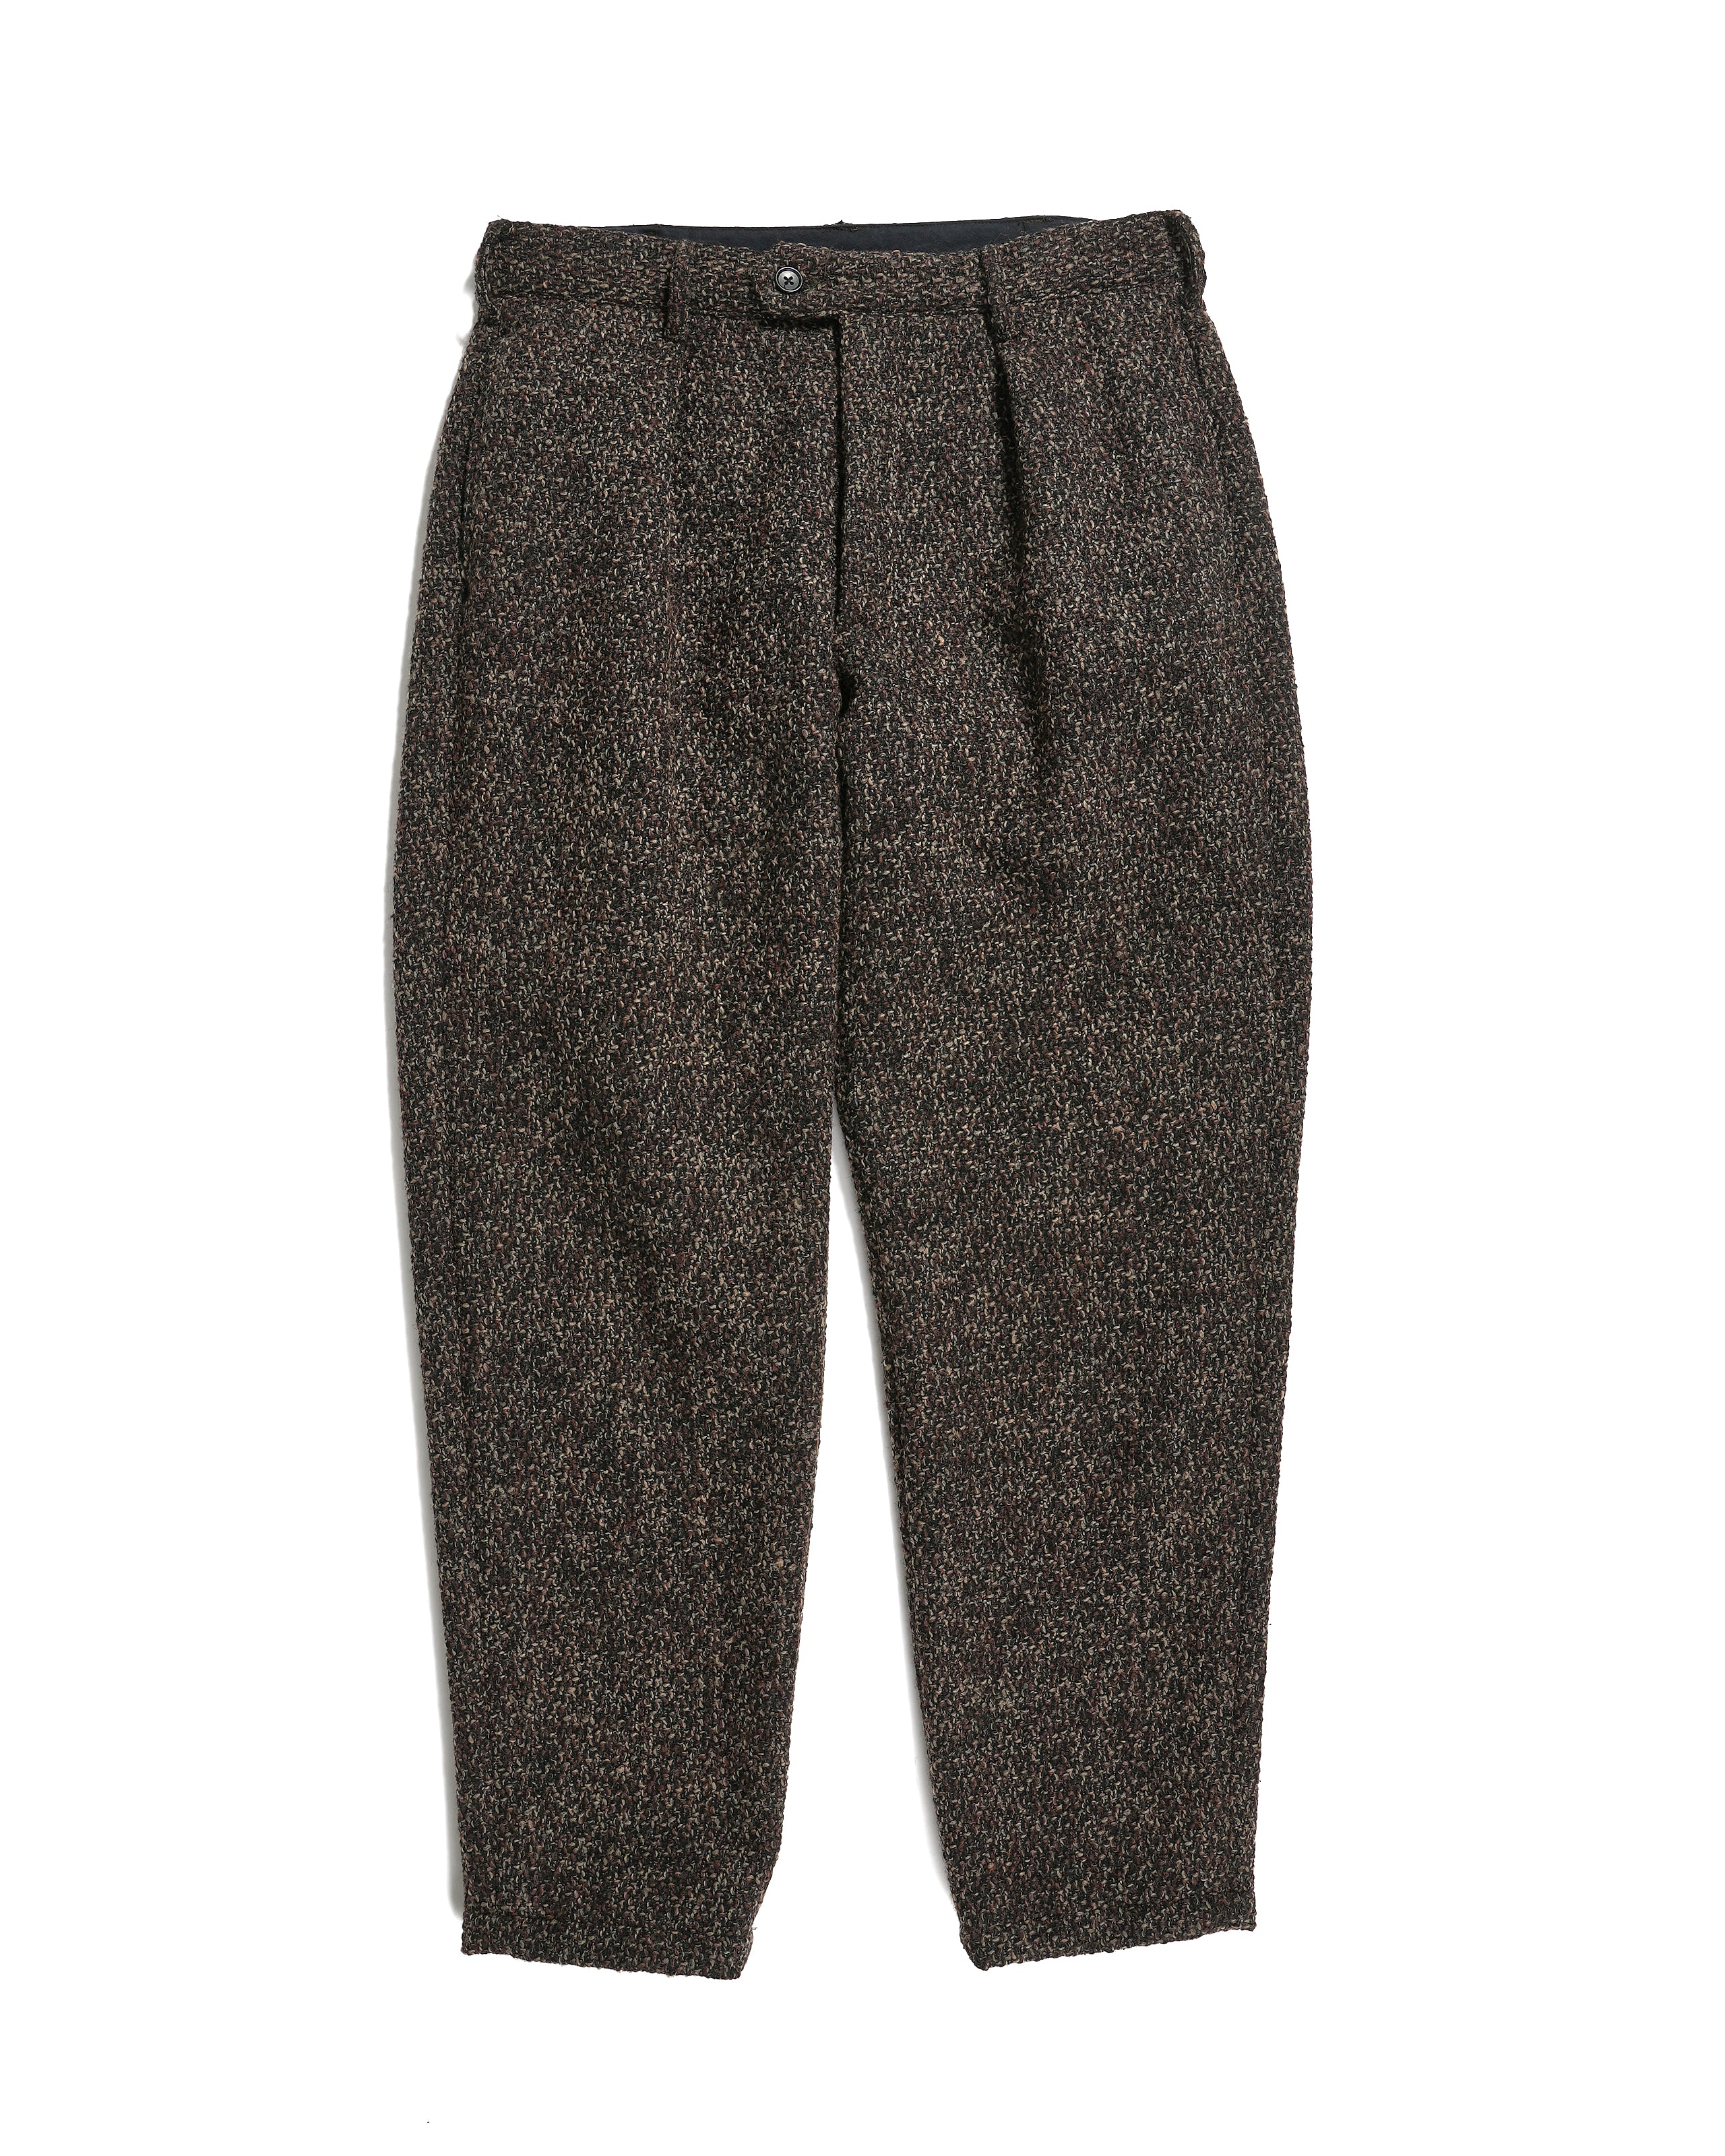 Carlyle Pant - Dk. Brown Polyester Wool Tweed Boucle